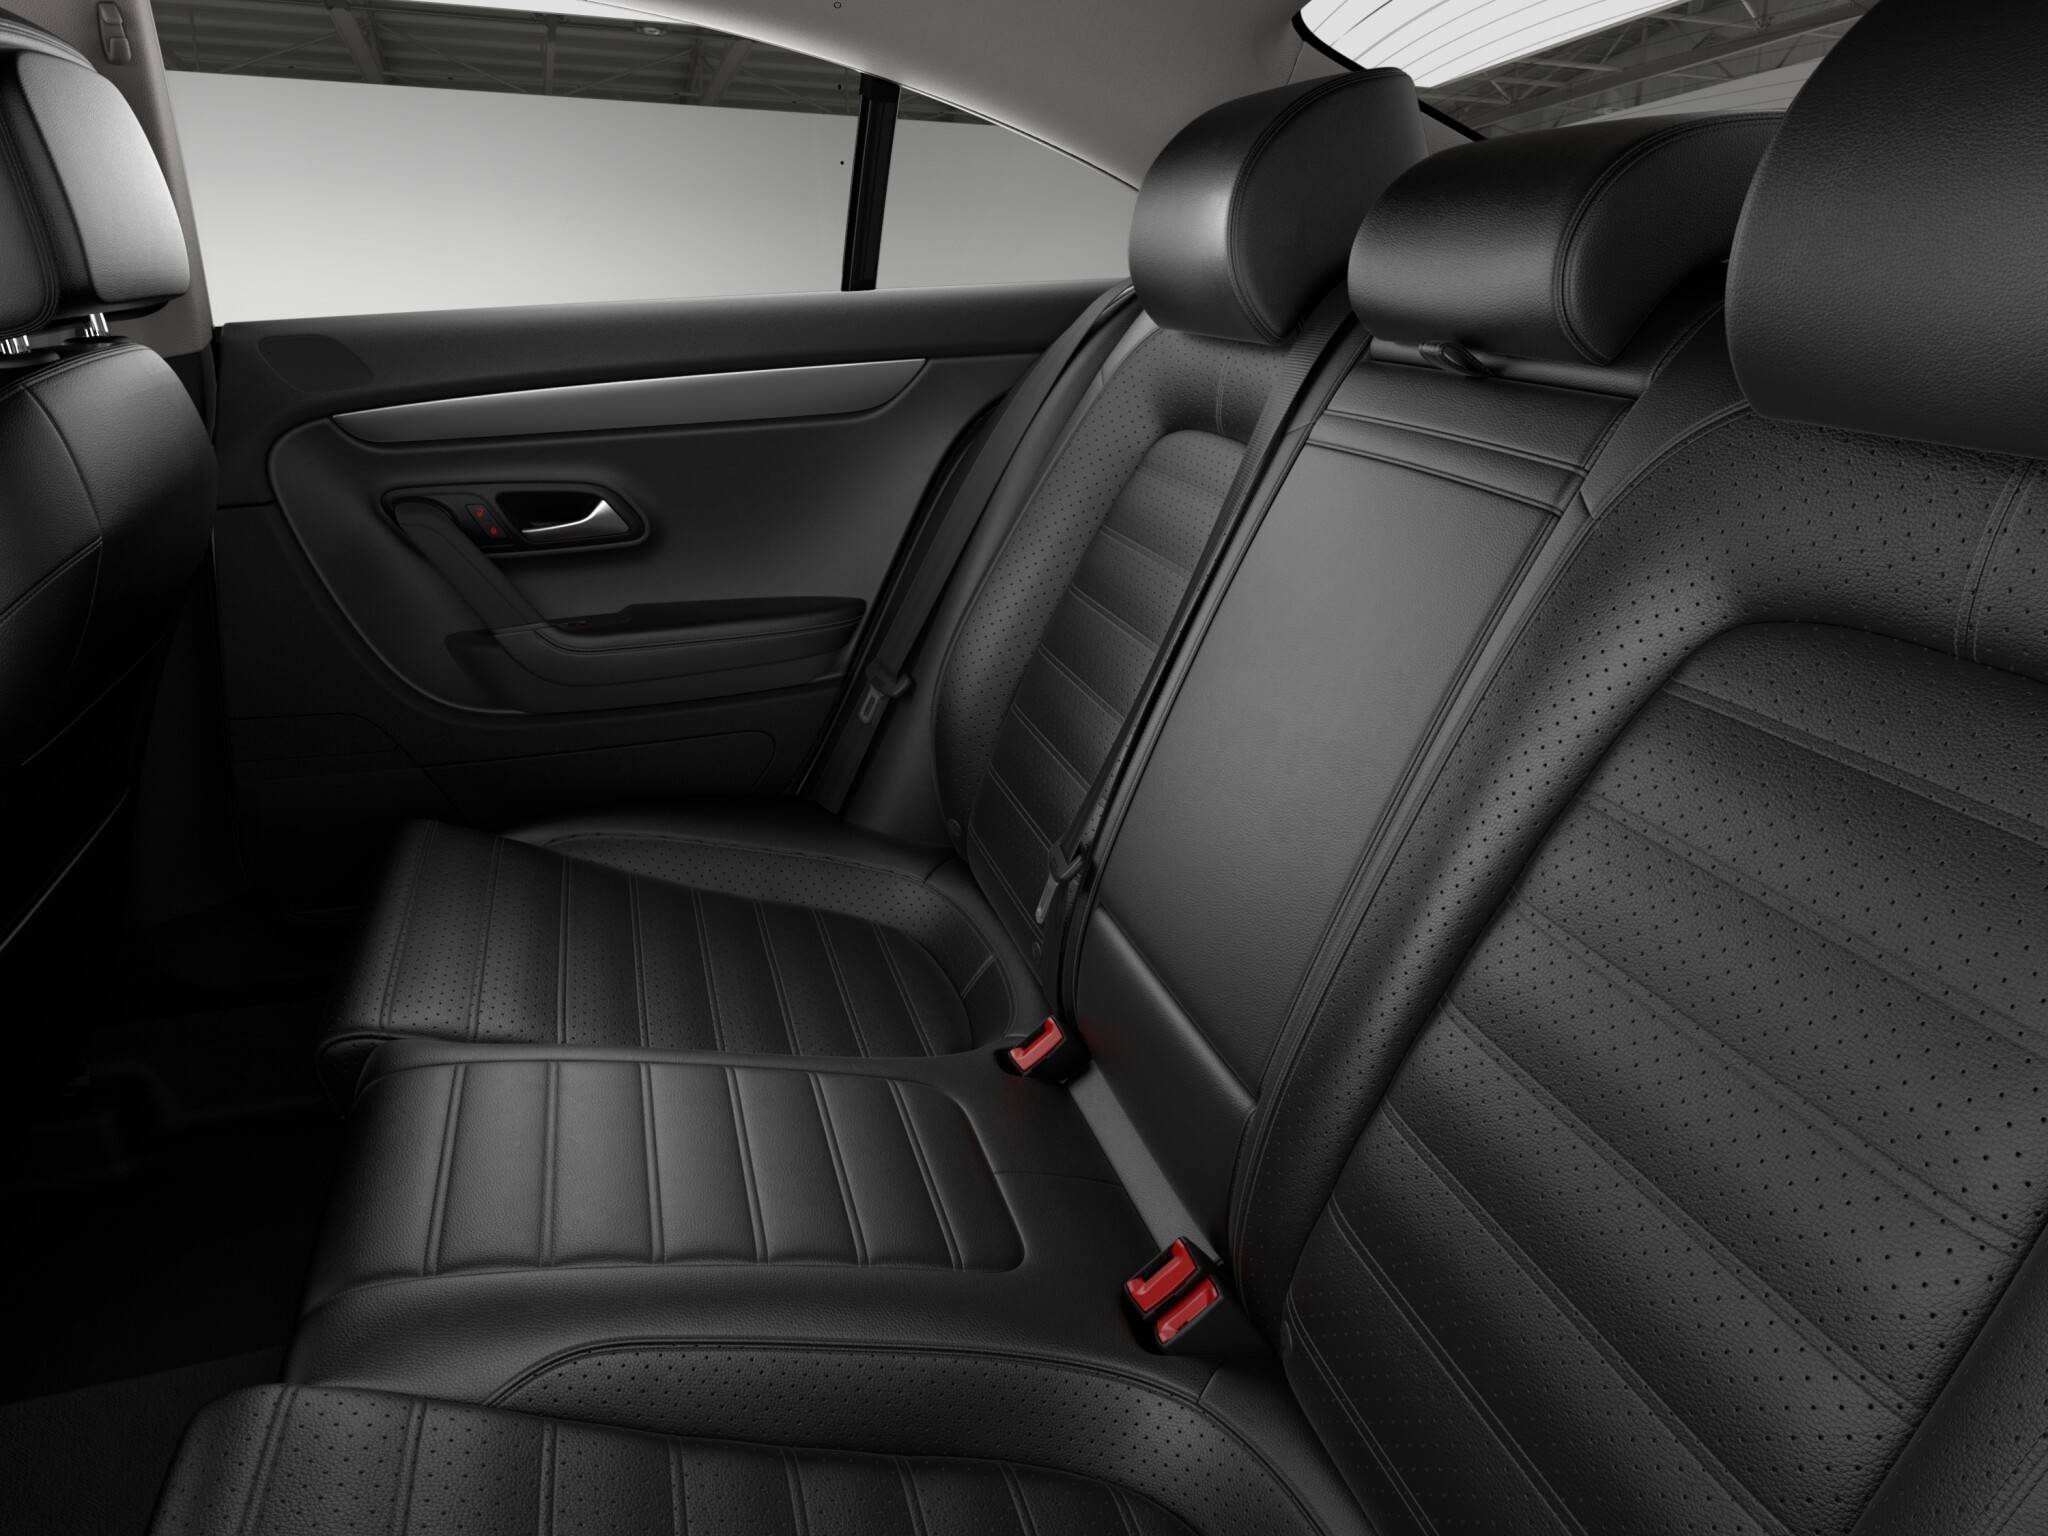 Volkswagen CC V6 Executive 4MOTION interior rear seat view